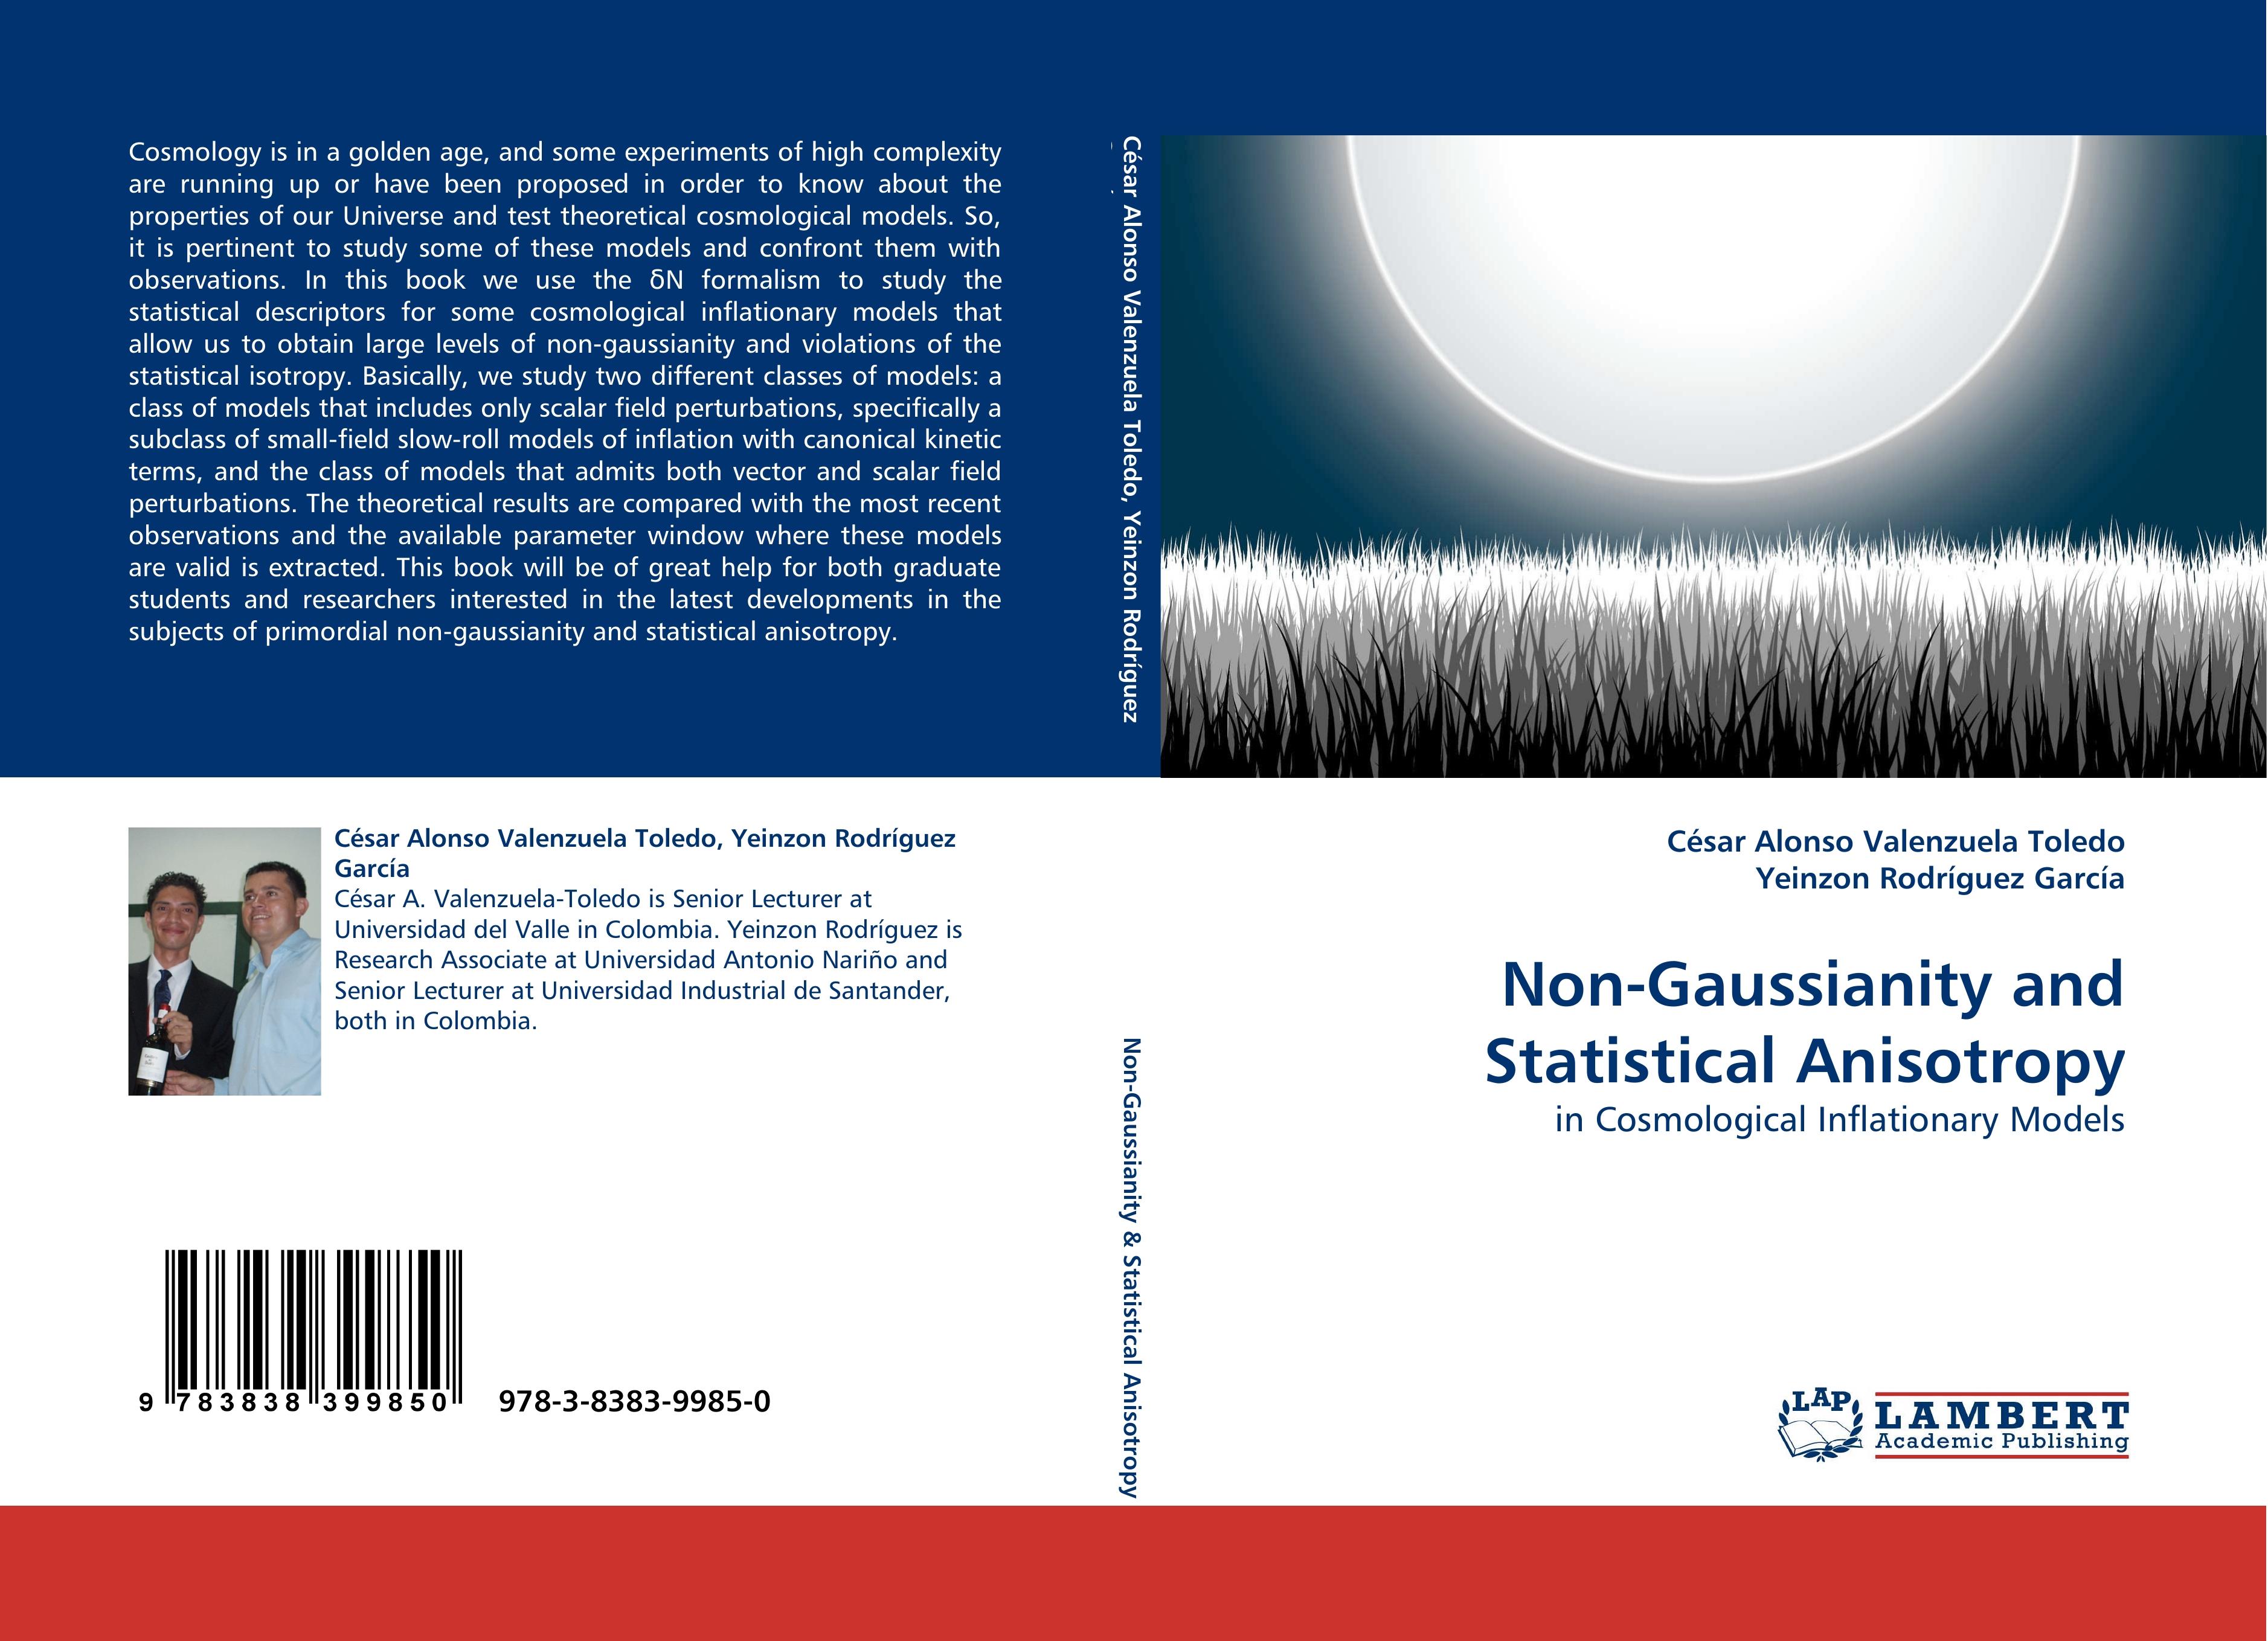 Non-Gaussianity and Statistical Anisotropy - César Alonso Valenzuela Toledo Yeinzon Rodriguez Garcia